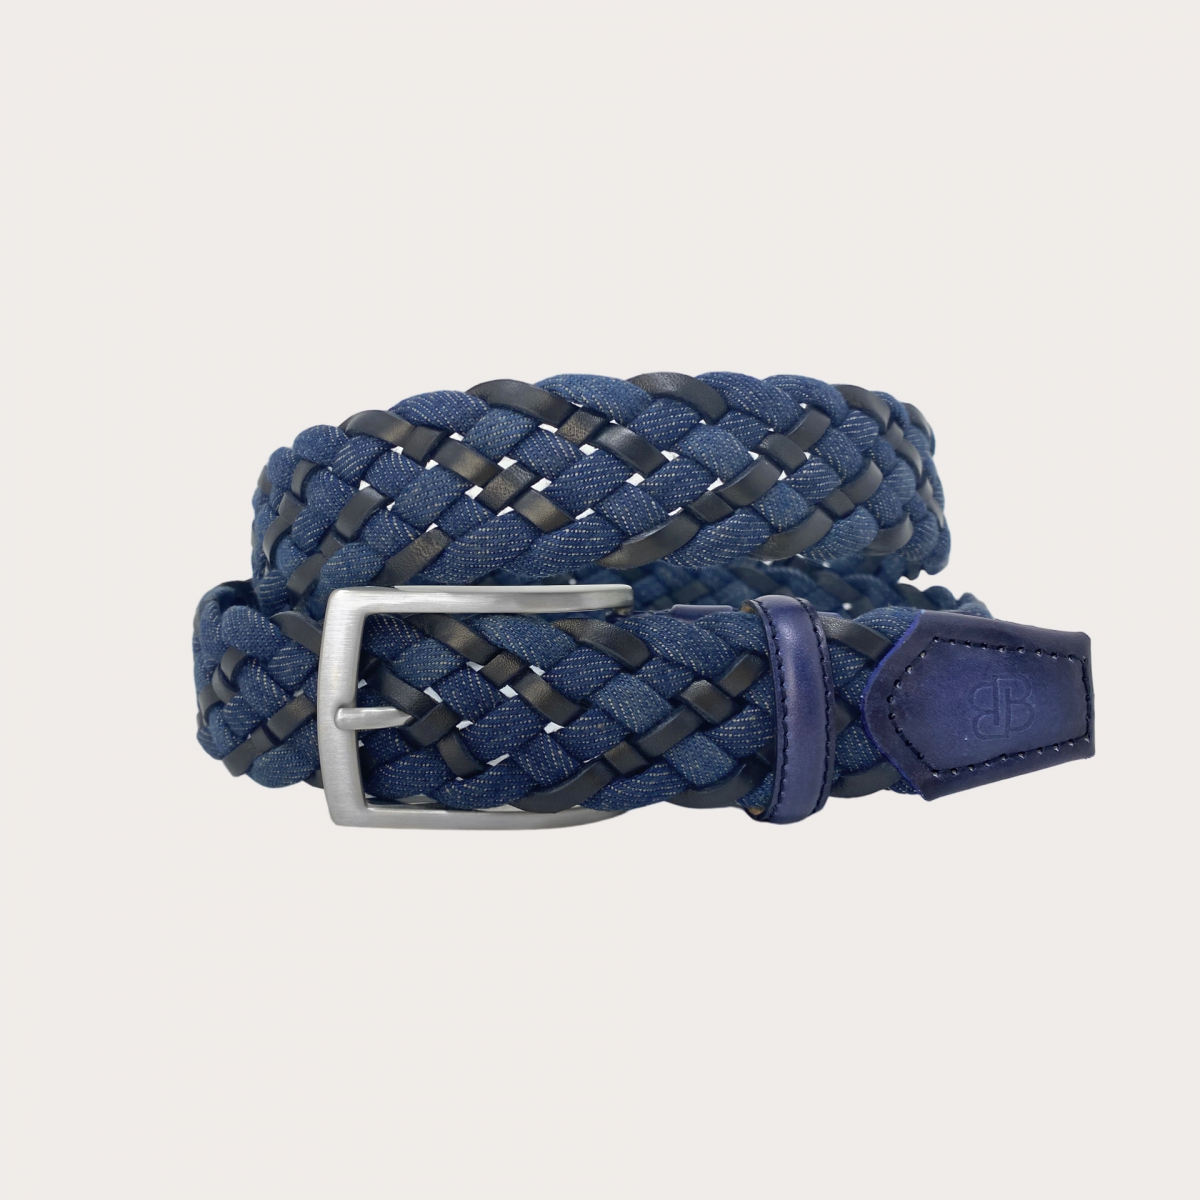 https://www.brucleshop.com/21183-verybig_default/braided-blue-and-black-jeans-belt.jpg